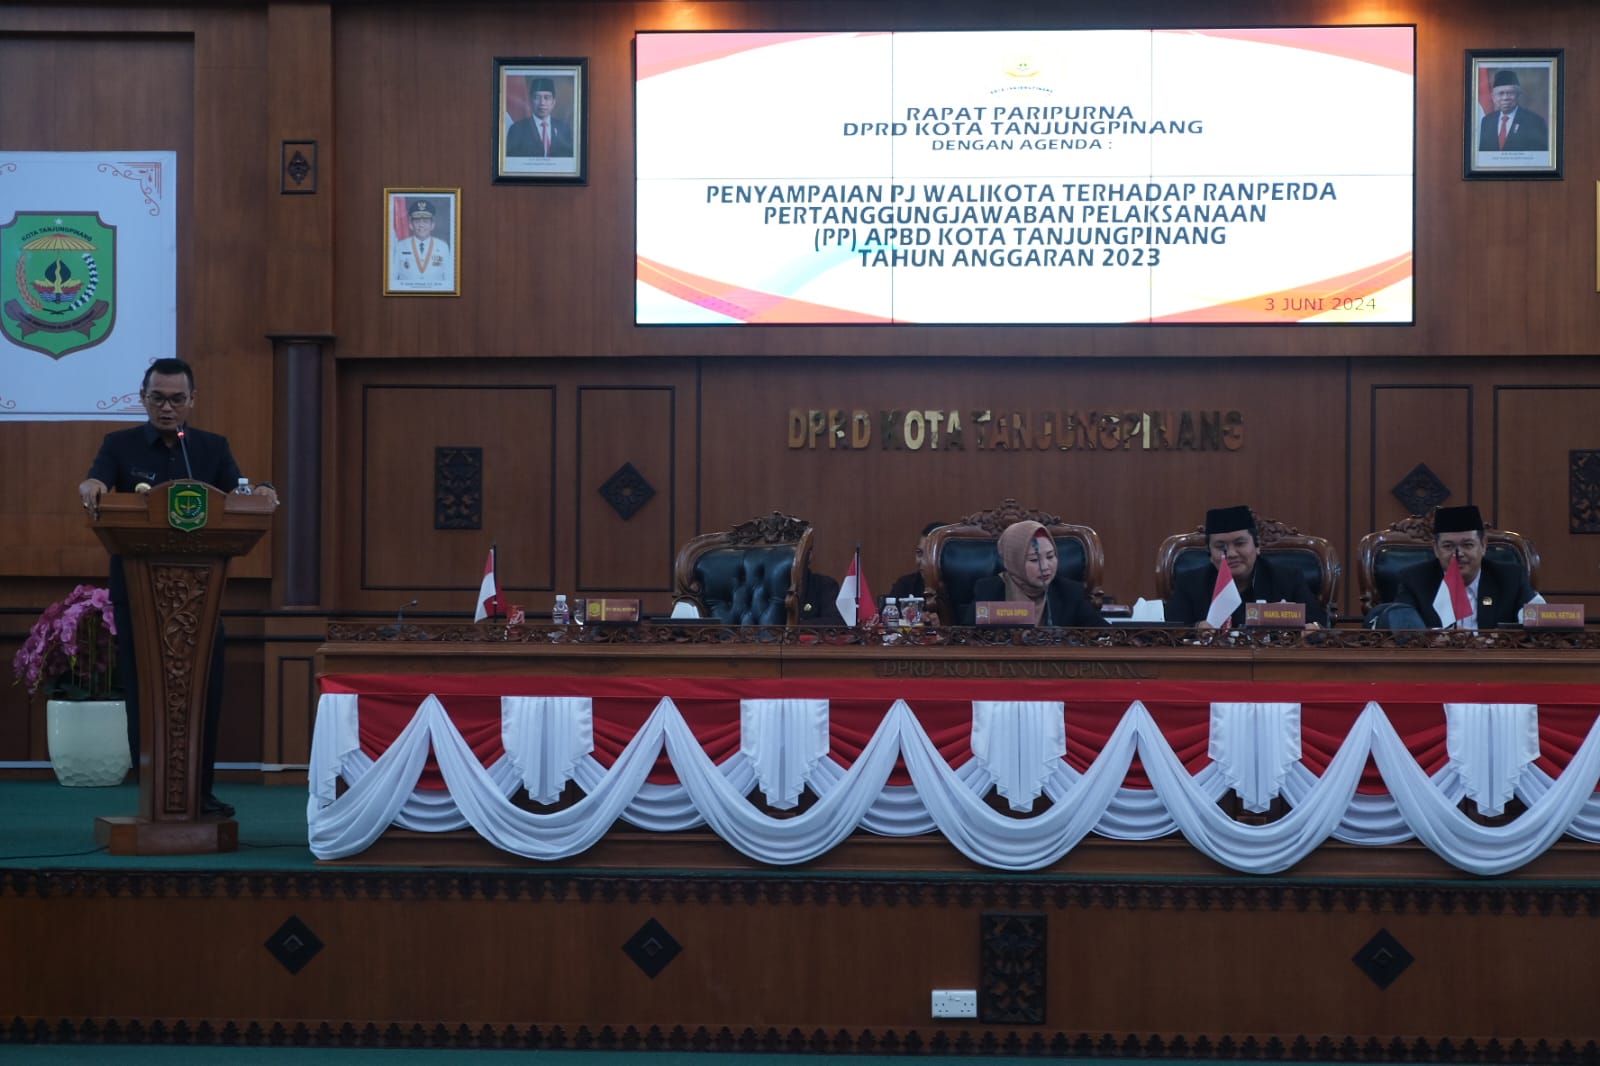 Rapat Paripurna Agenda Penyampaian Pj Walikota Tanjungpinang Terhadap Ranperda Pertanggungjawaban Pelaksanaan (PP) APBD Kota Tanjungpinang T.A.2023/ f.dok.Red.